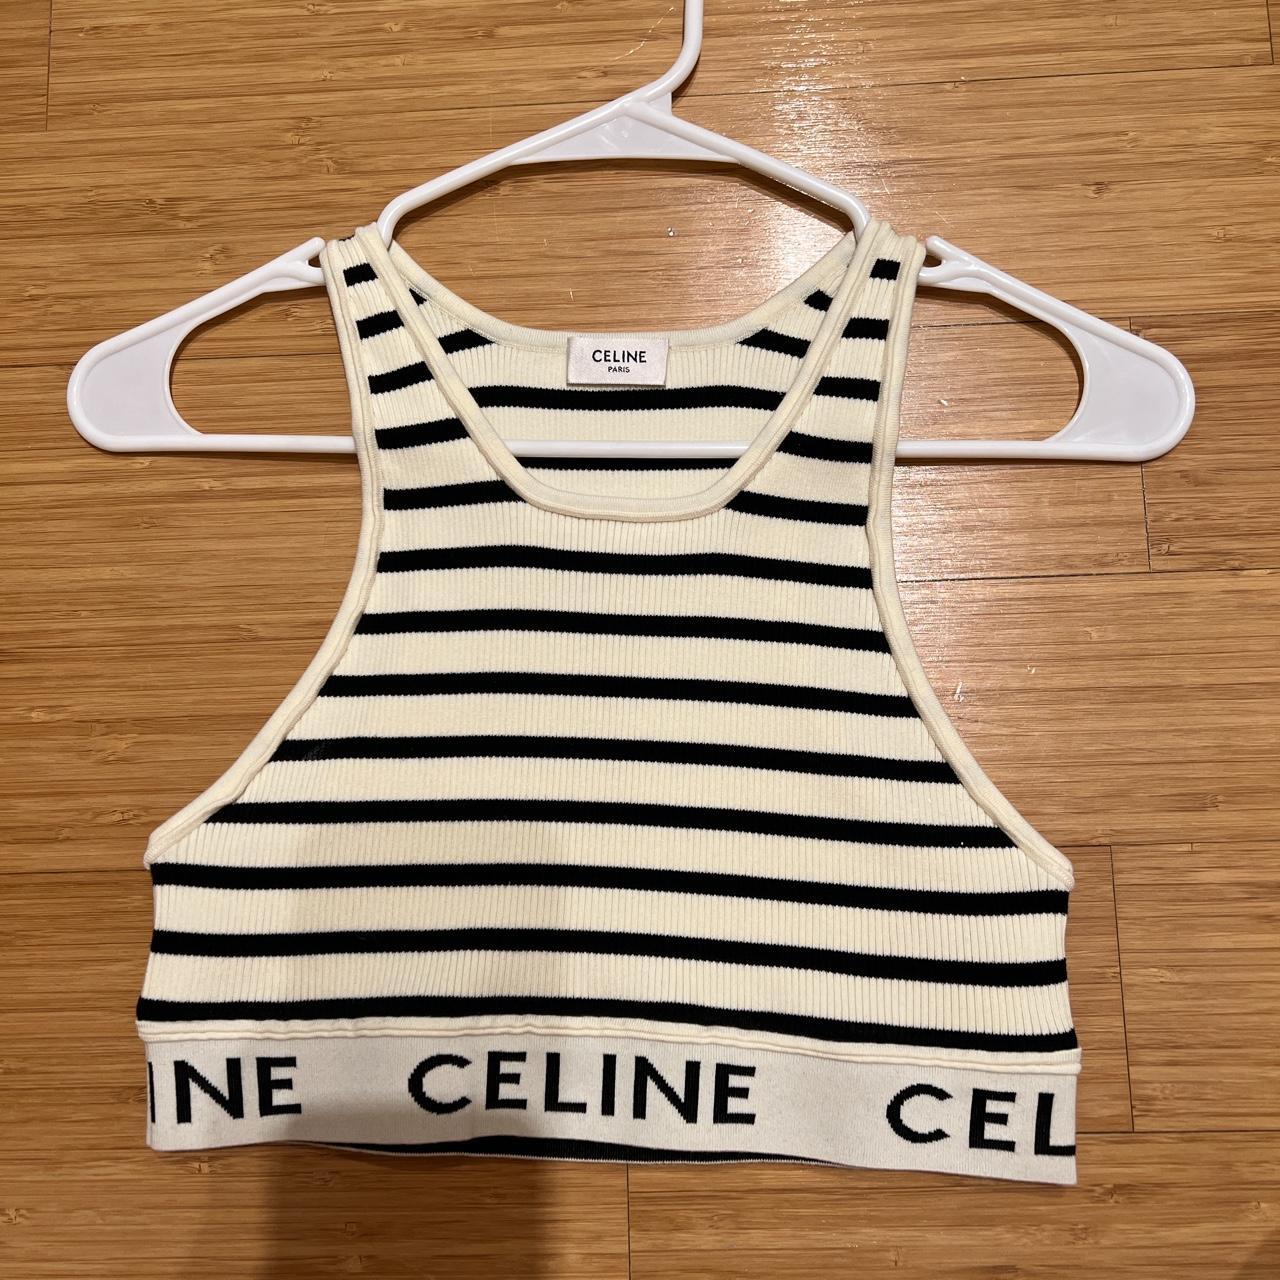 Celine shirt never worn - Depop